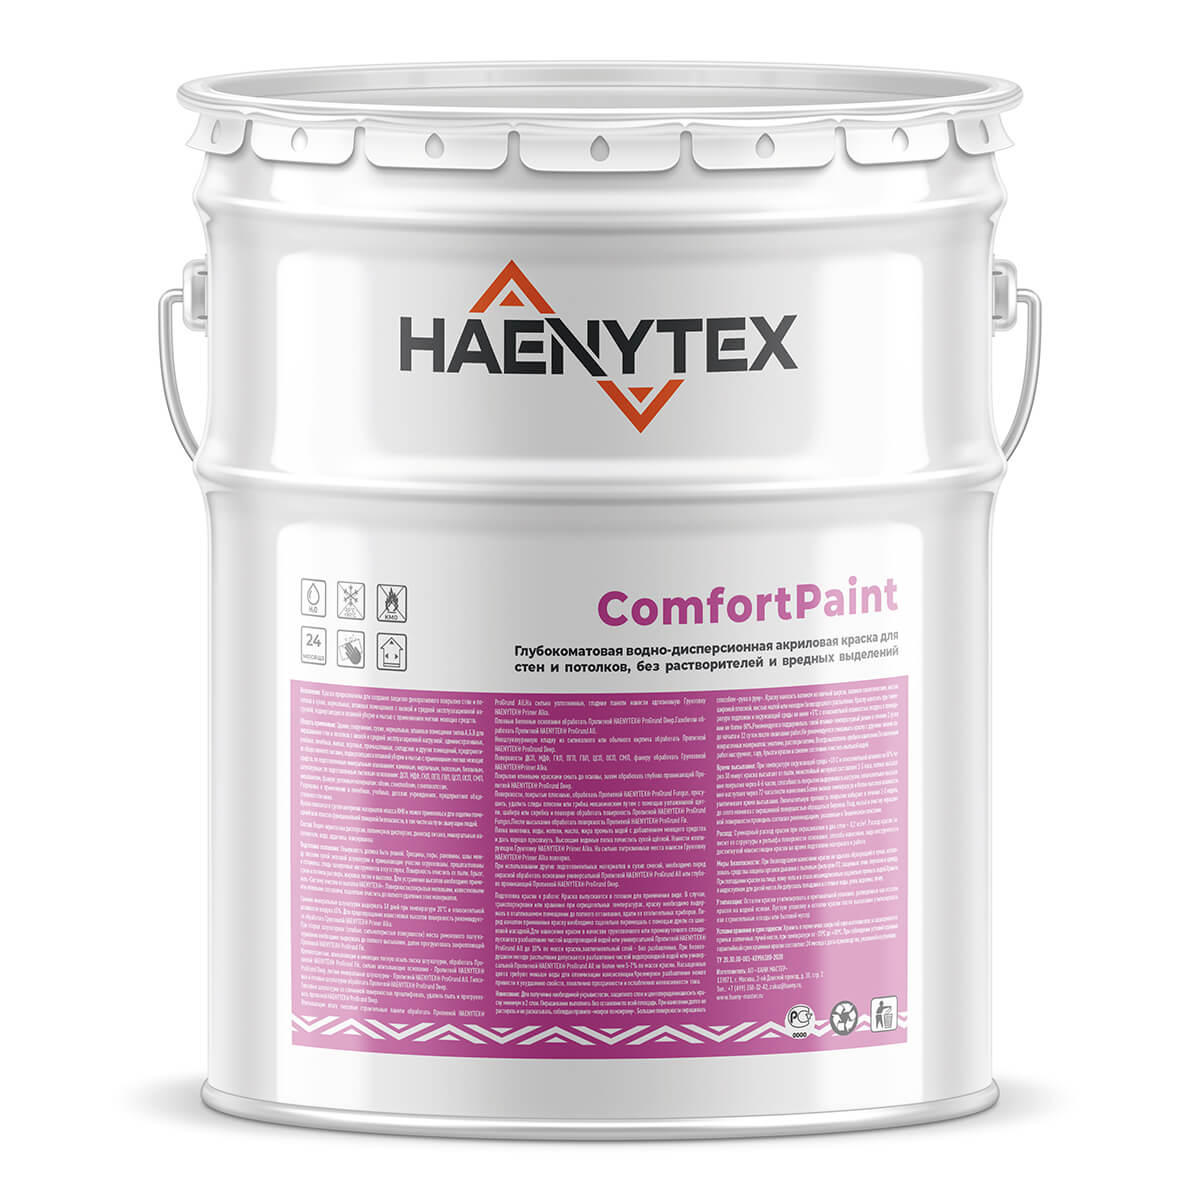 HAENYTEX® ComfortPaint